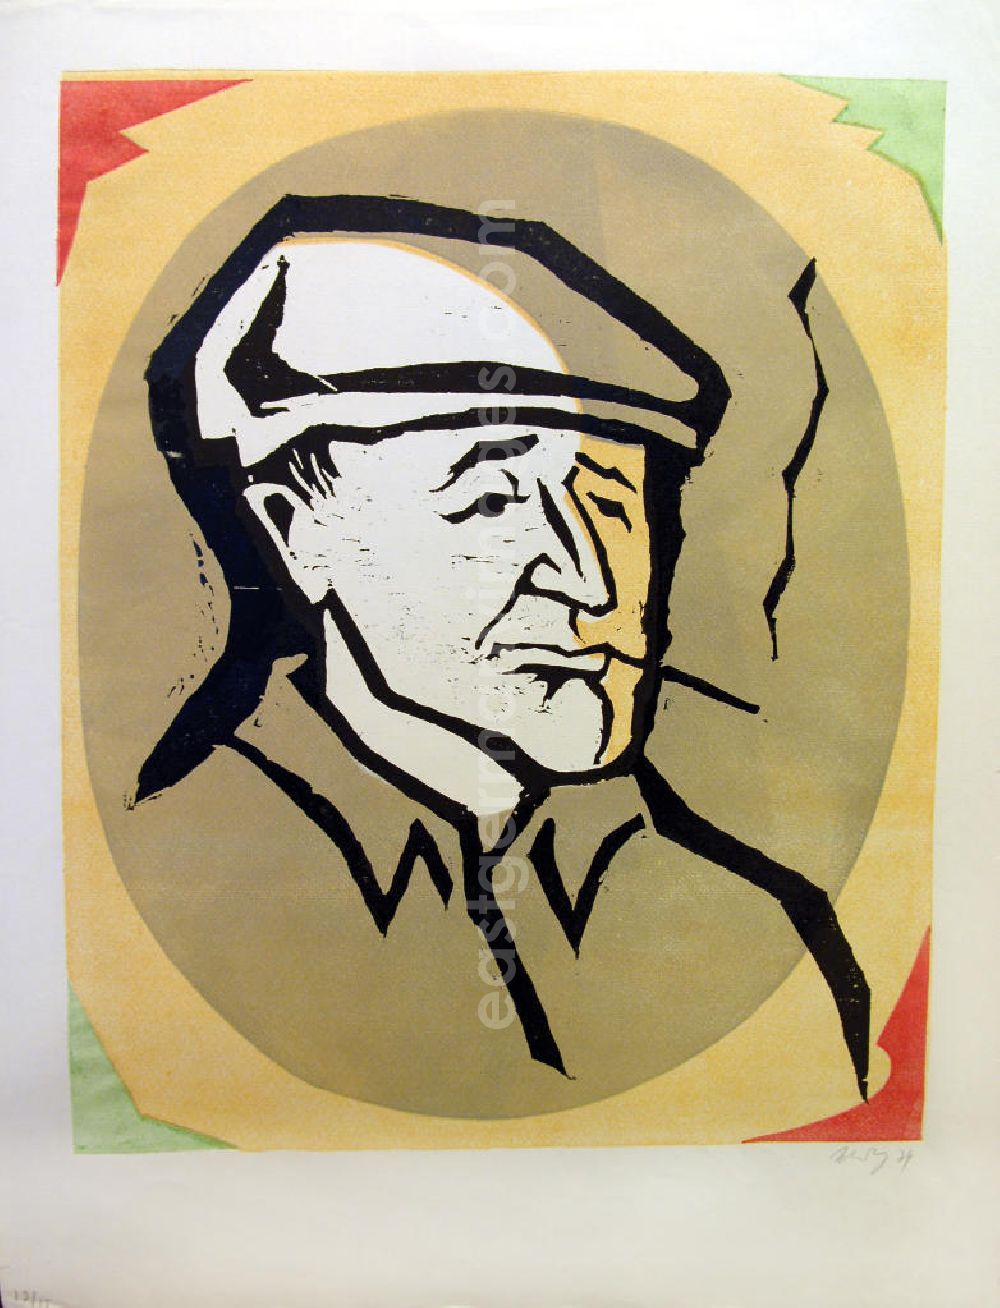 GDR photo archive: Berlin - Grafik von Herbert Sandberg über Bertolt Brecht (*10.02.1898 †14.08.1956) b.b. (Brecht Porträt links, raucht) aus dem Jahr 1974, 36,8x42,